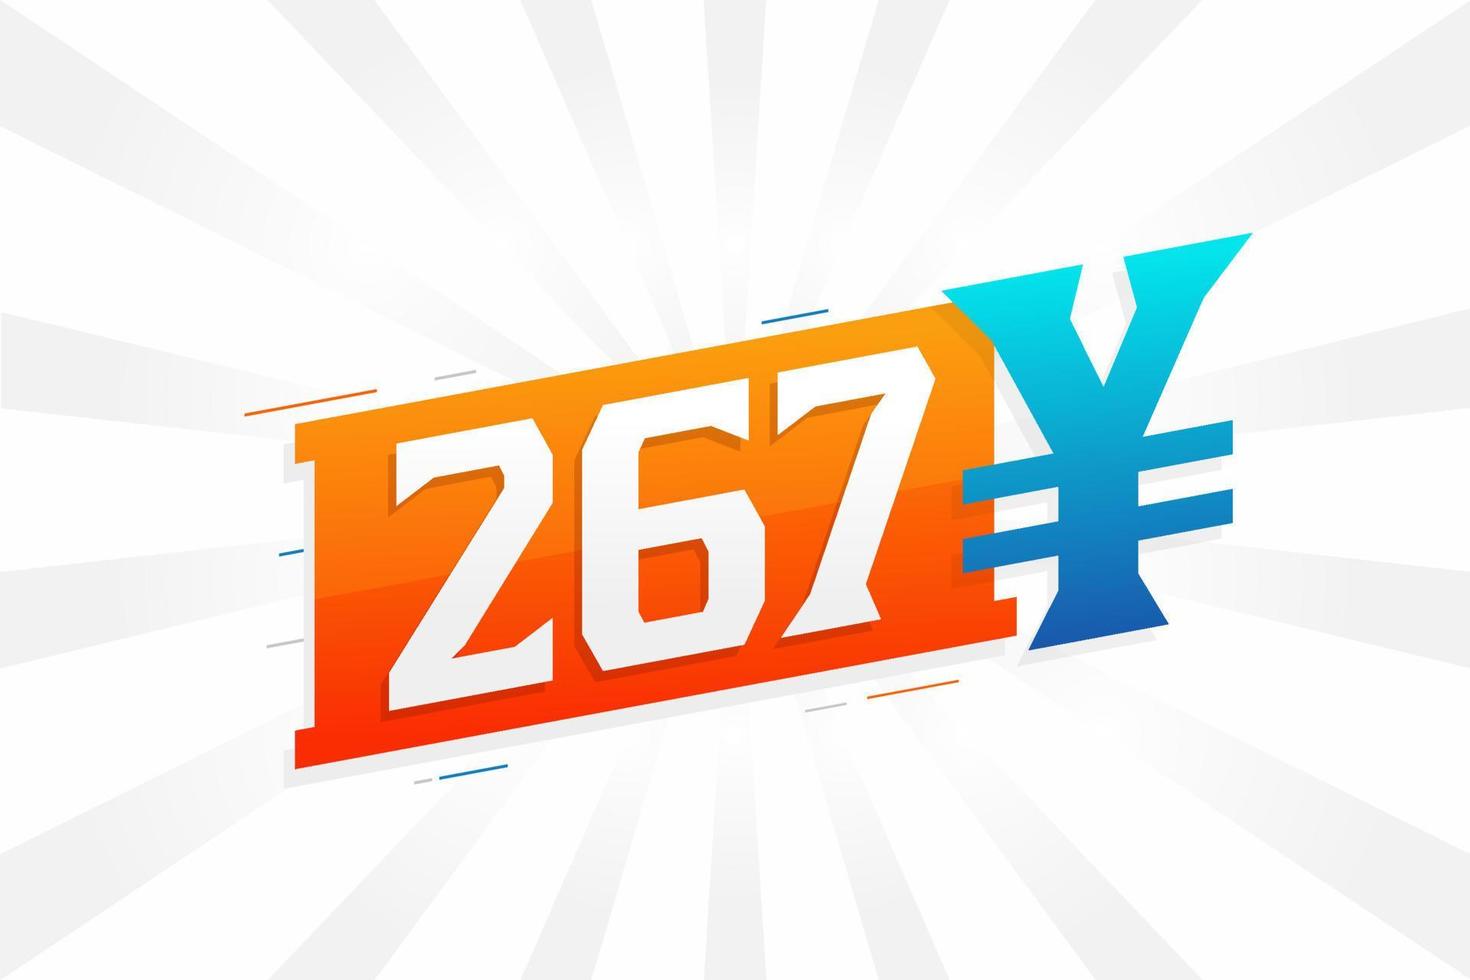 267 yuan Cinese moneta vettore testo simbolo. 267 yen giapponese moneta i soldi azione vettore